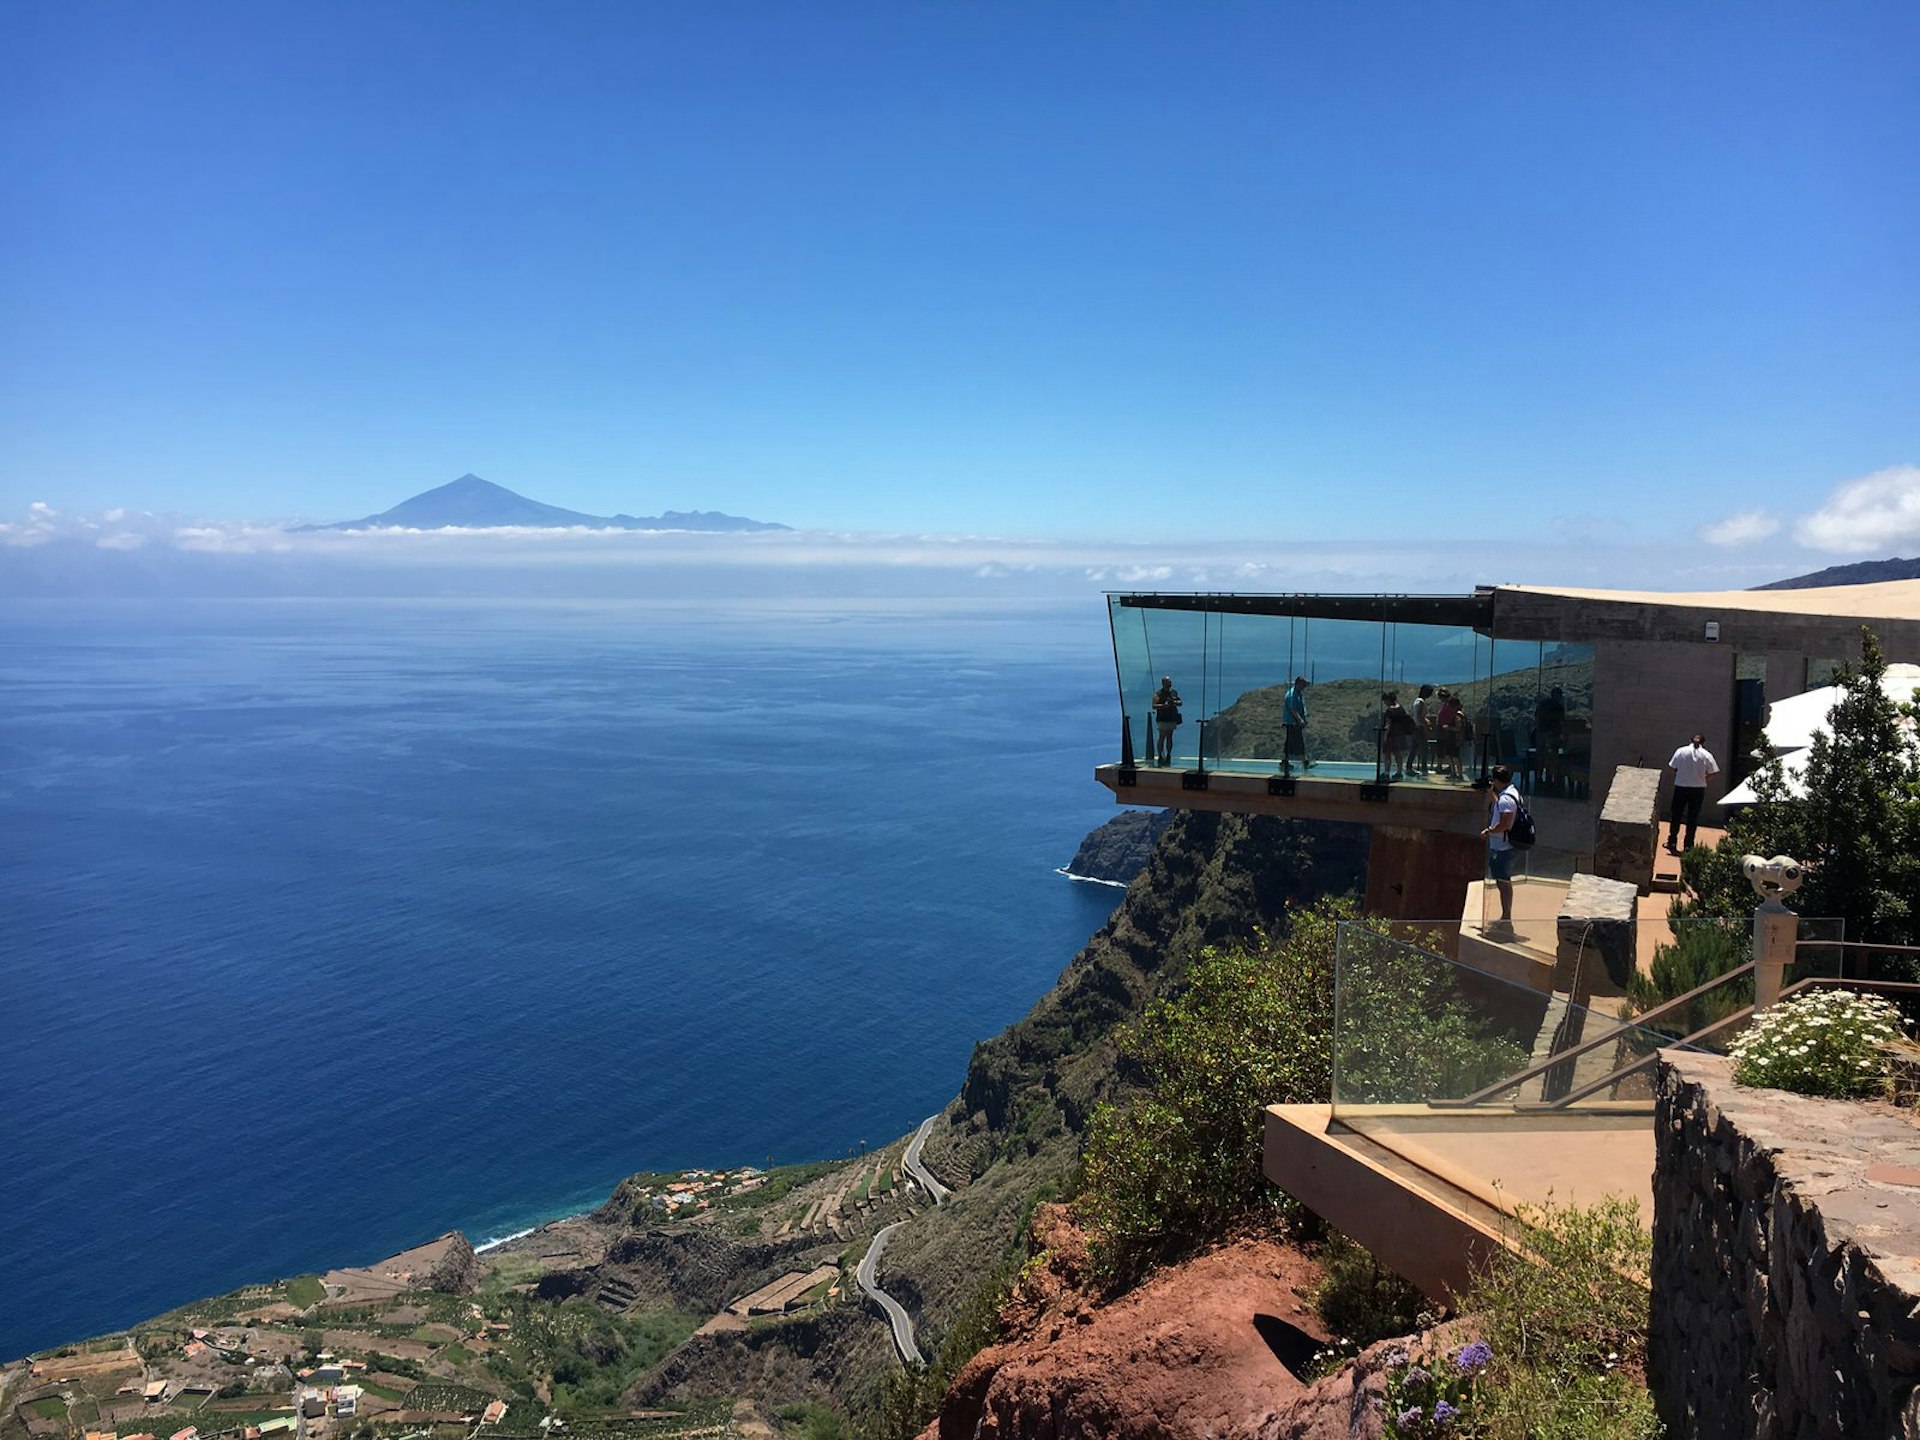 Looking out over Tenerife's volcano El Teide from the Mirador de Abrante © Louise Bastock / Lonely Planet